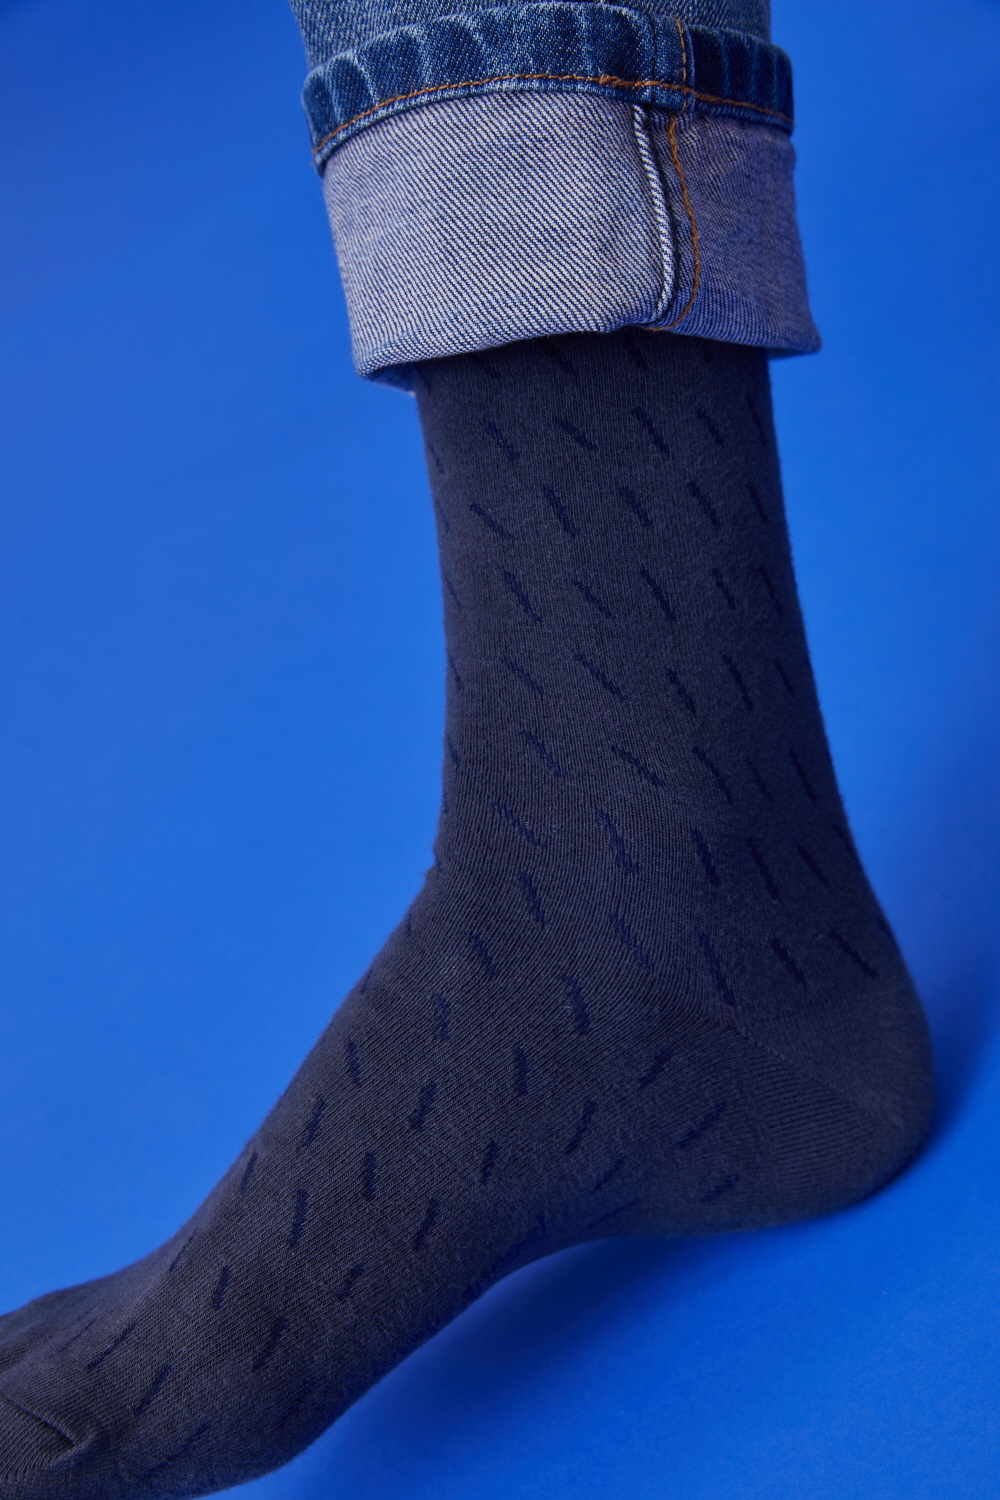 socks detail image-S5L8